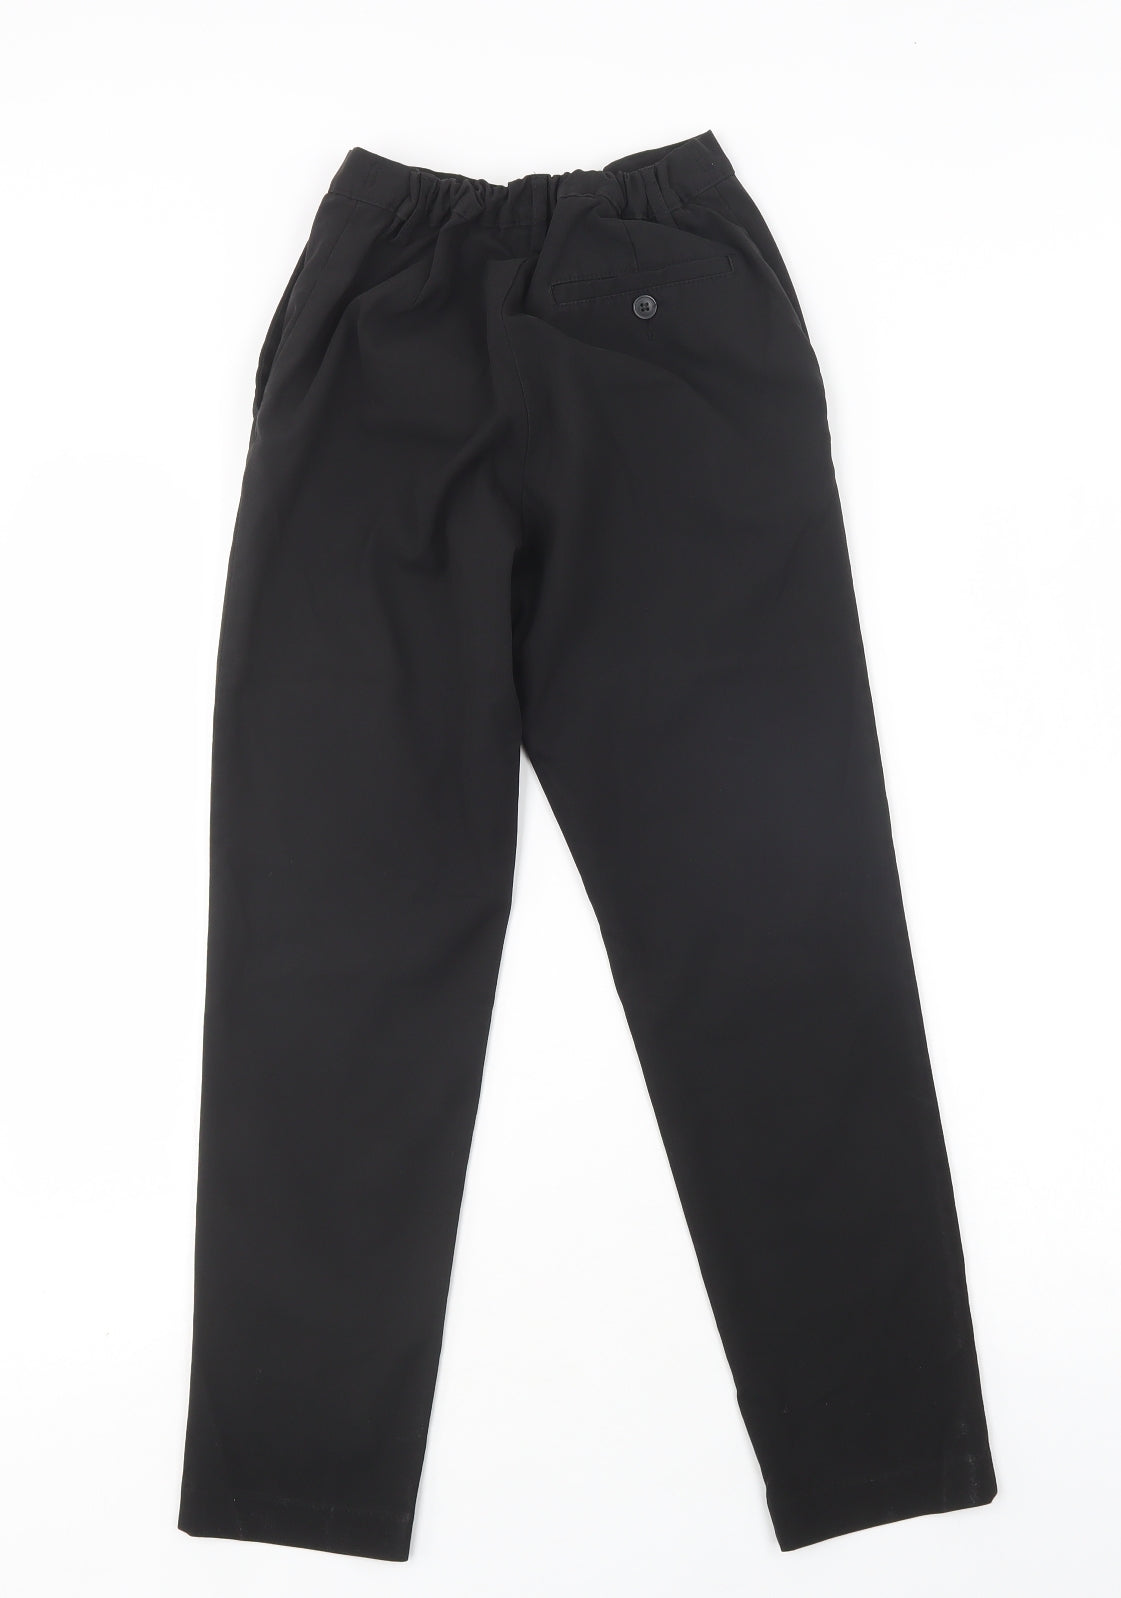 NEXT Girls Black  Polyester Dress Pants Trousers Size 12 Years  Regular Hook & Loop - School Wear